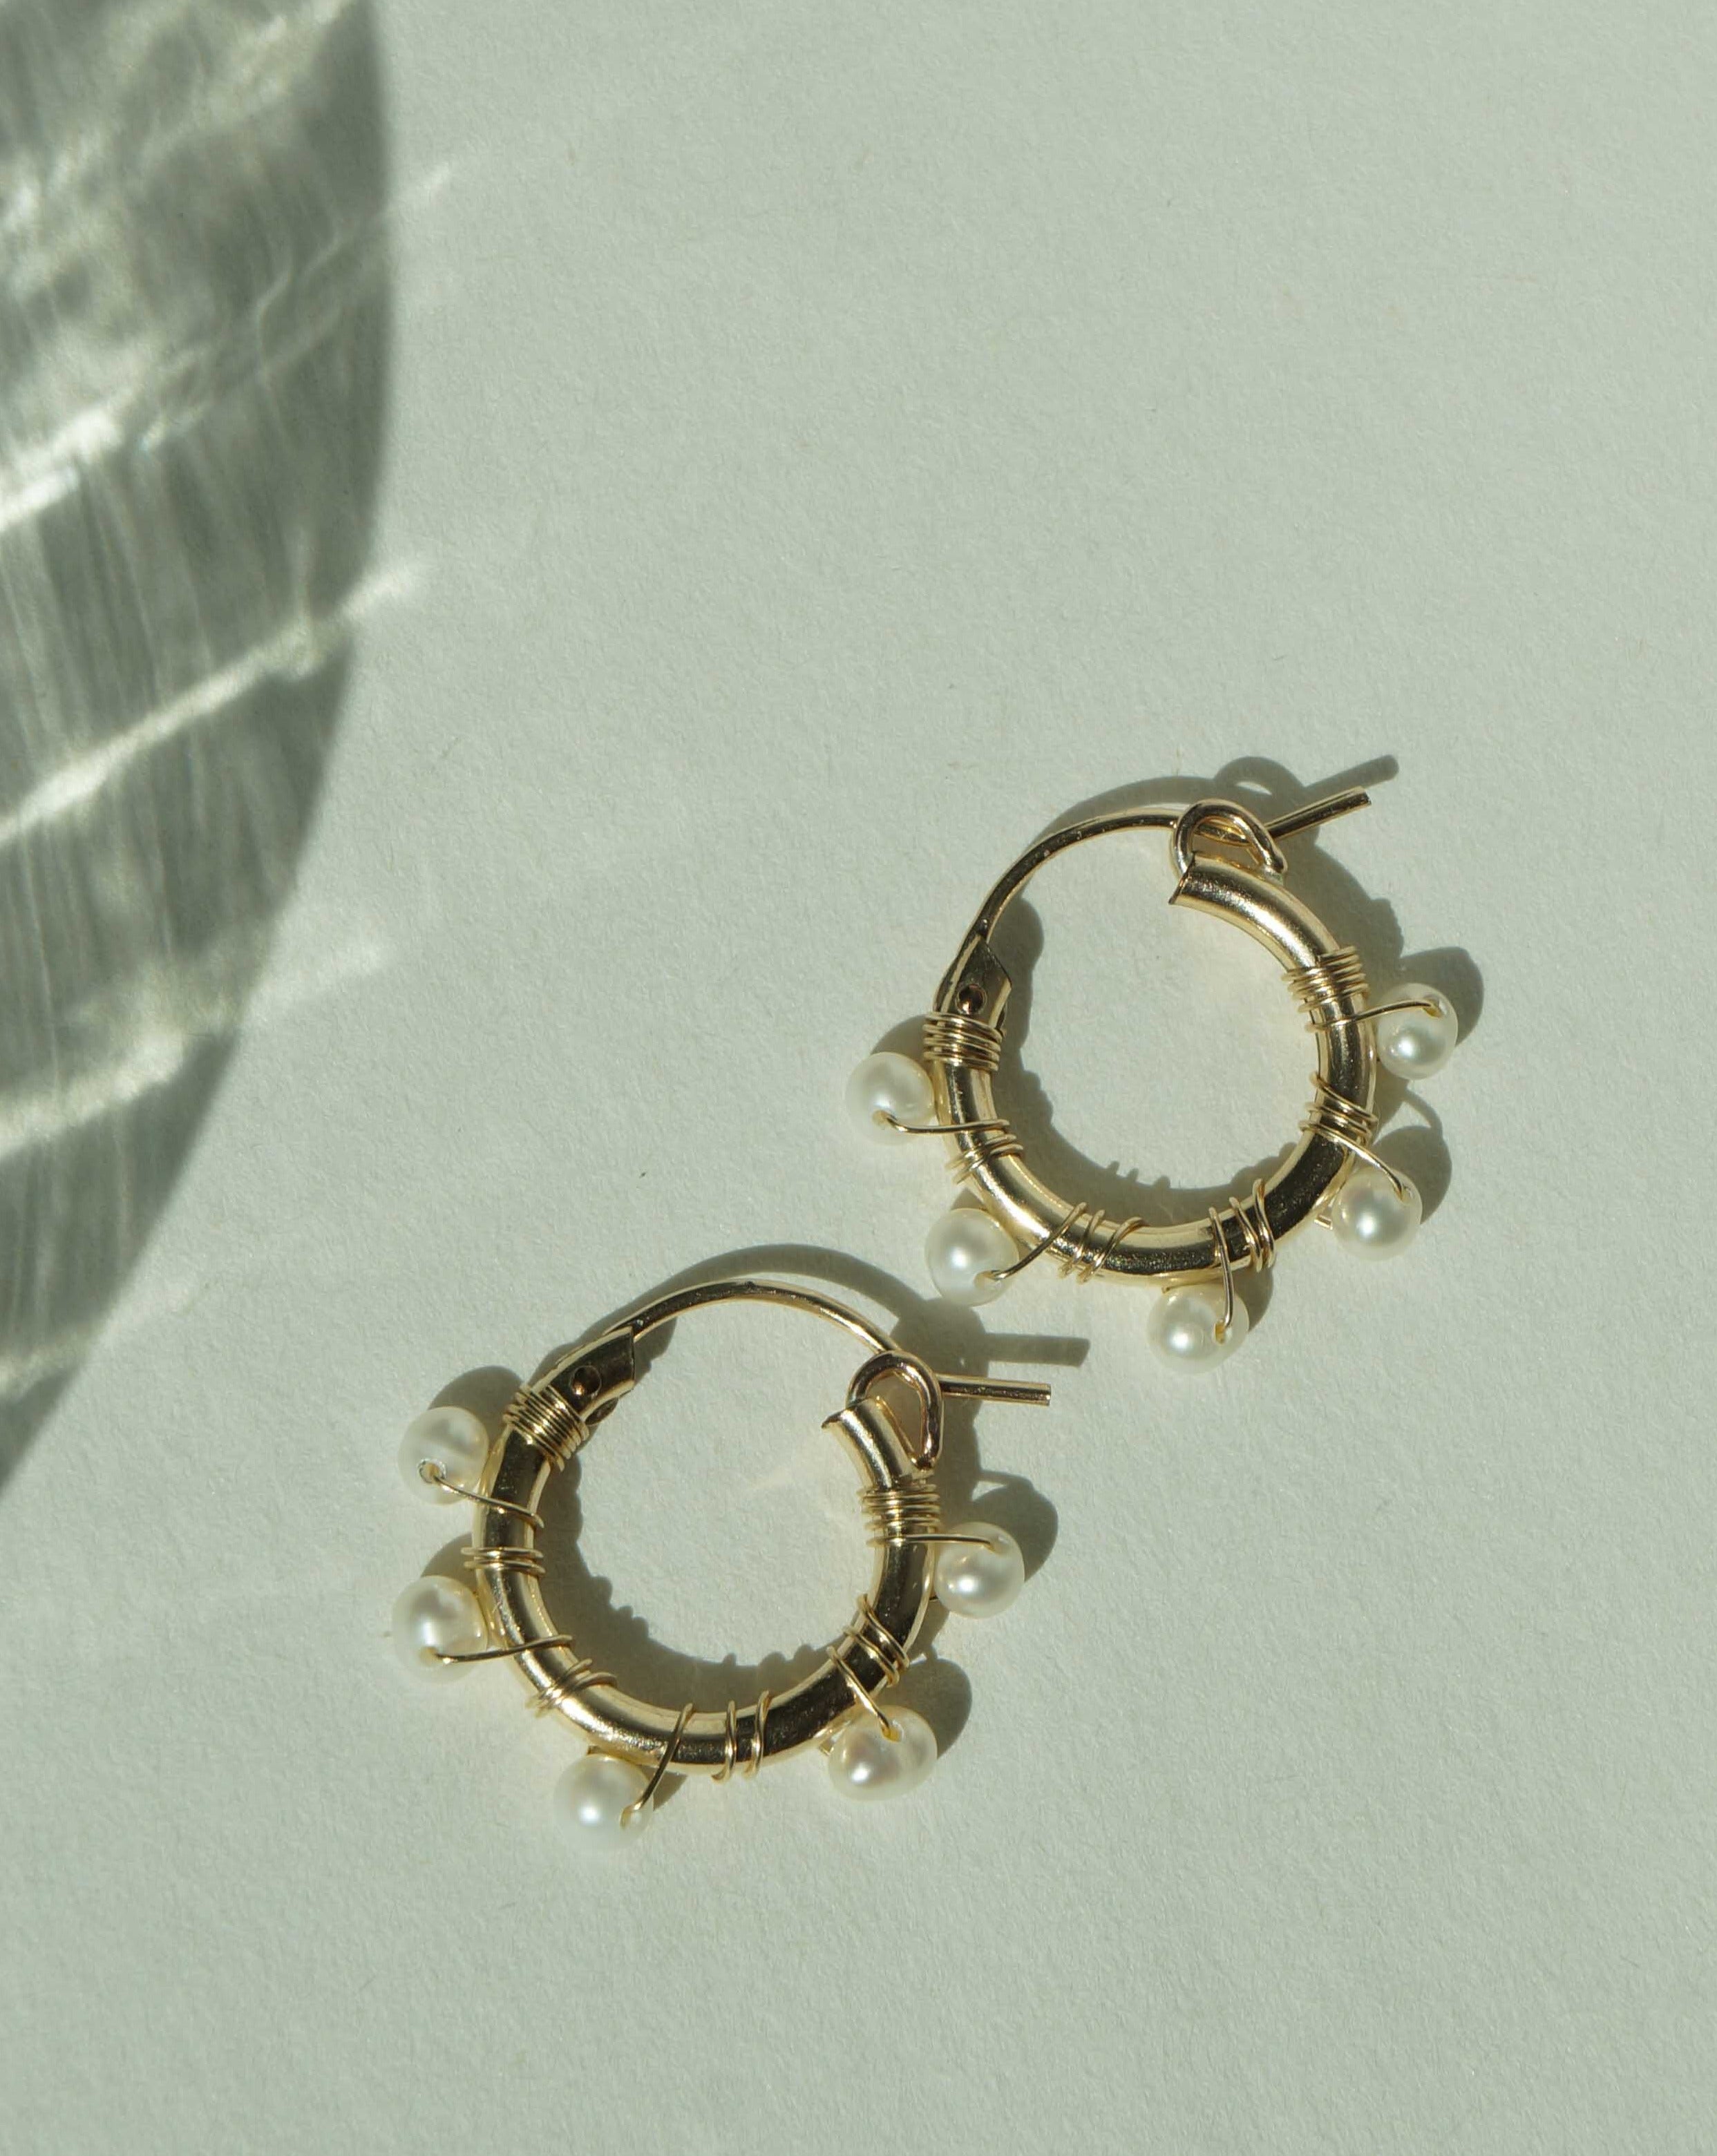 Natasha Hoop Earrings by KOZAKH. 12mm snap closure hoop earrings in 14K Gold Filled, featuring 7mm white potato Pearls.